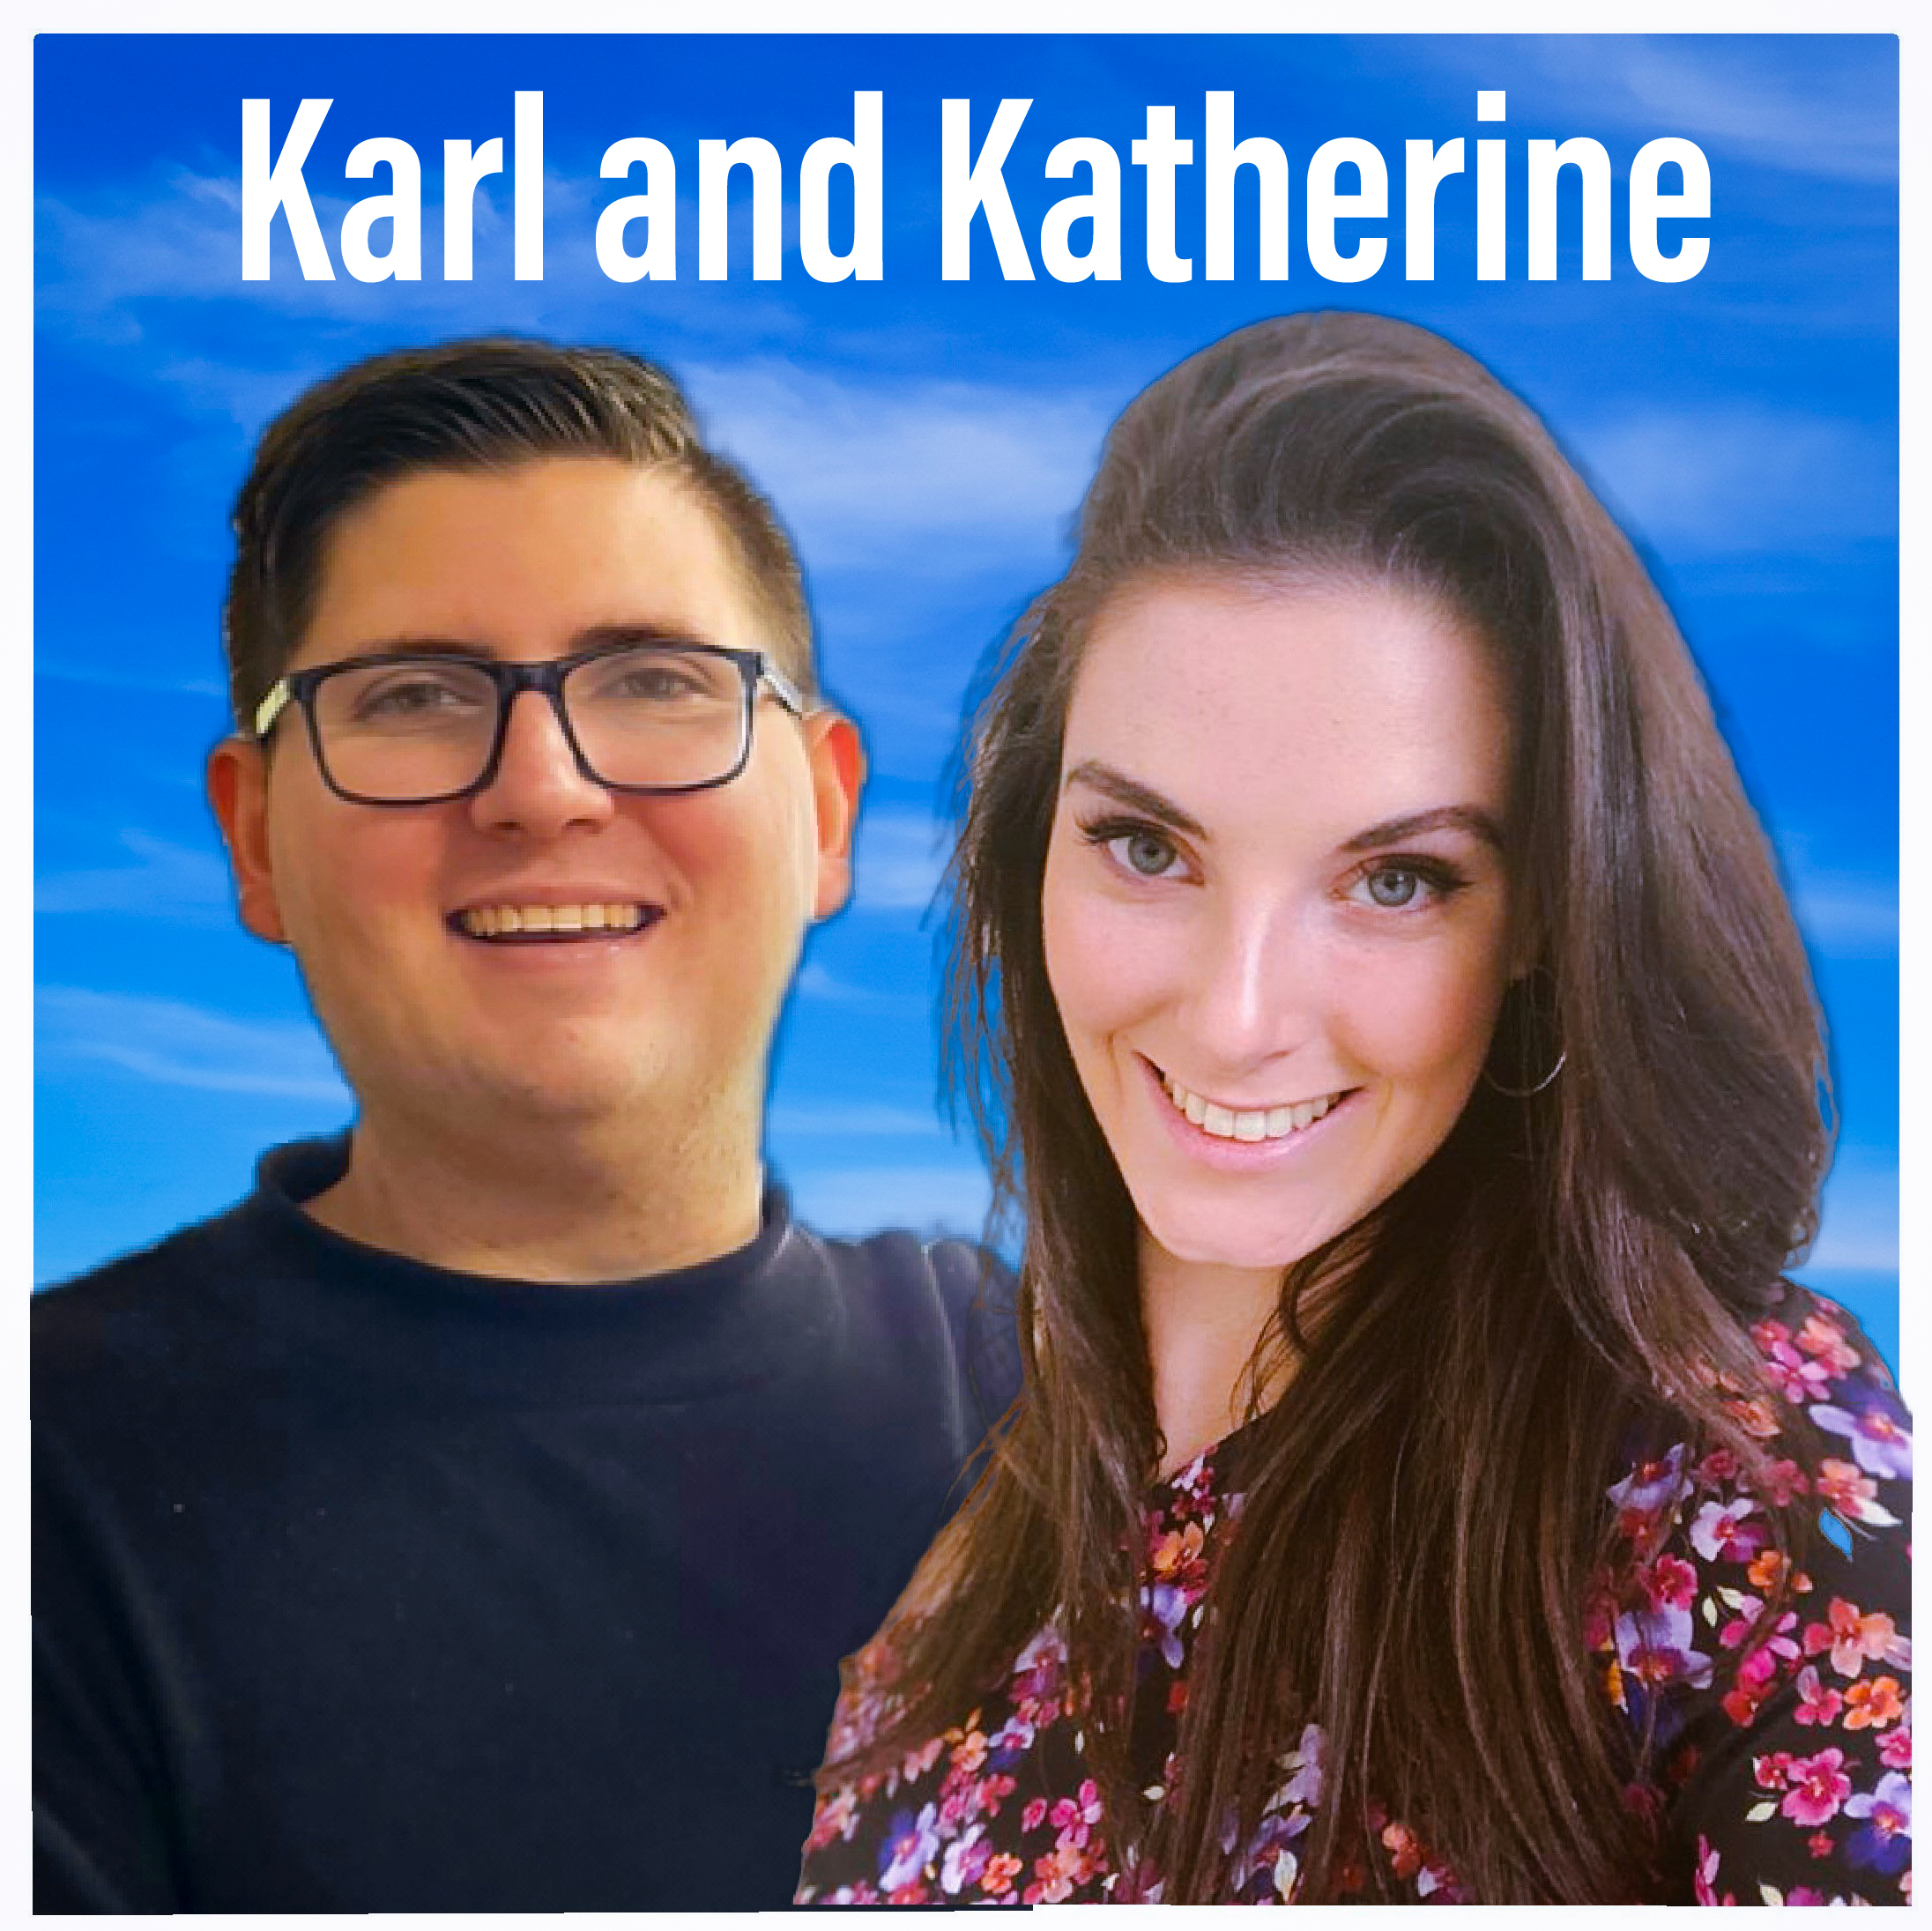 Karl and Katherine - Friday 17th September 2021